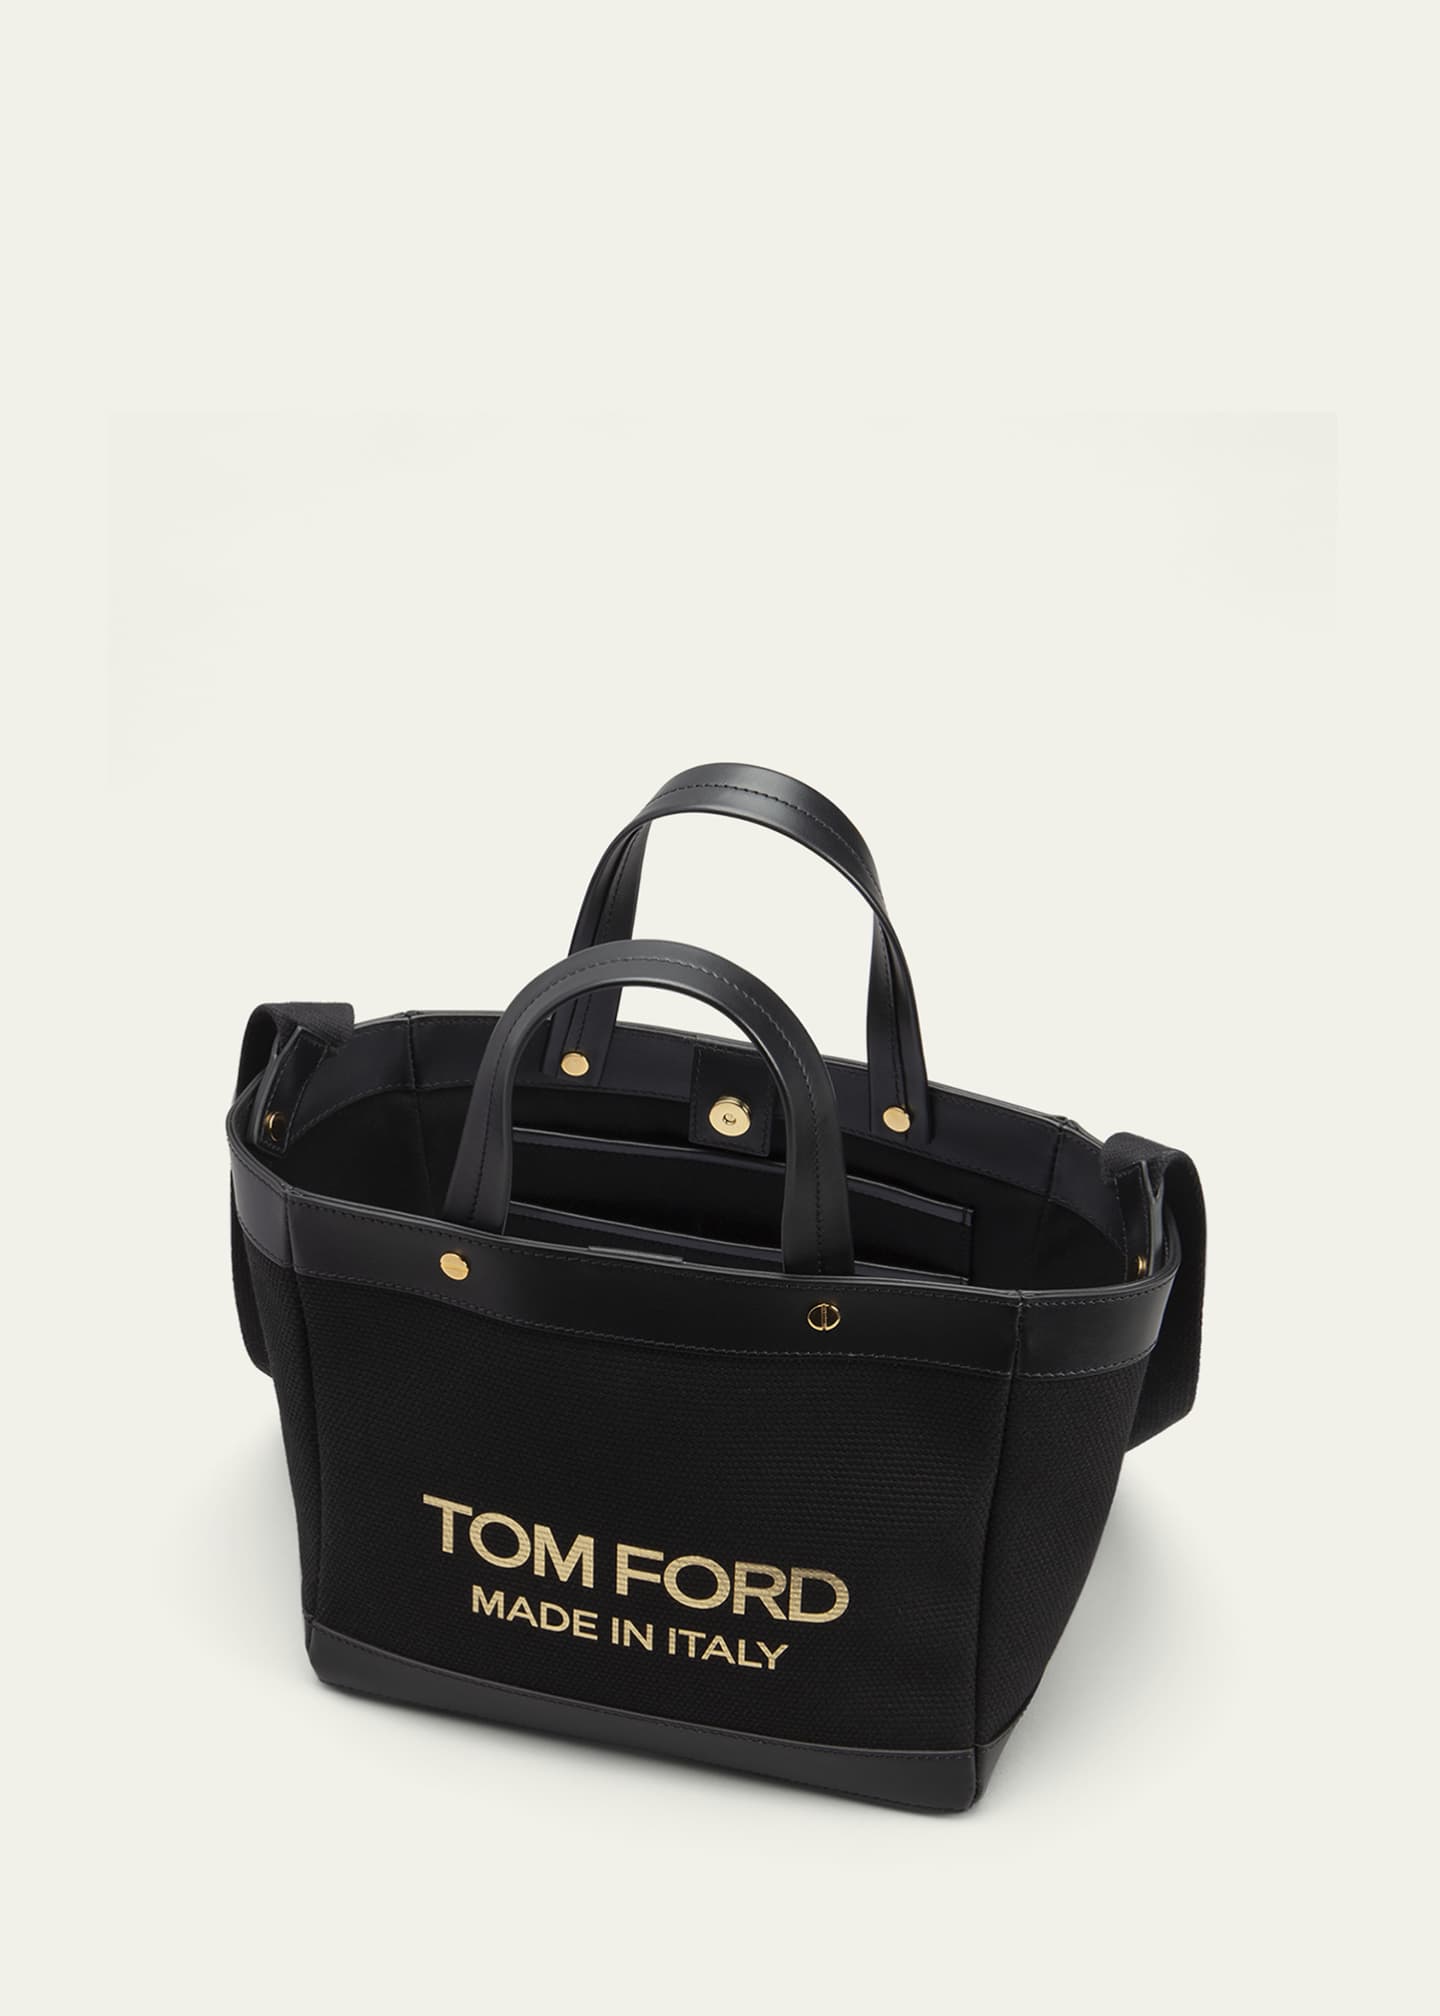 Tom Ford Canvas Mini Logo Shopping Tote Bag Black/Gold